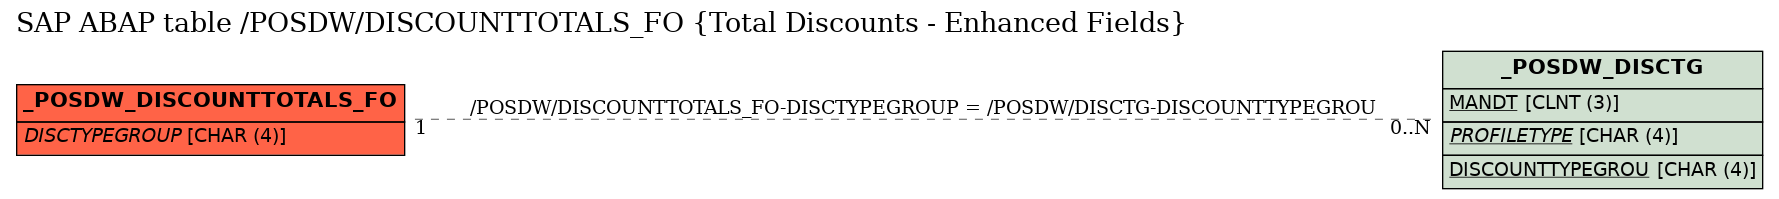 E-R Diagram for table /POSDW/DISCOUNTTOTALS_FO (Total Discounts - Enhanced Fields)